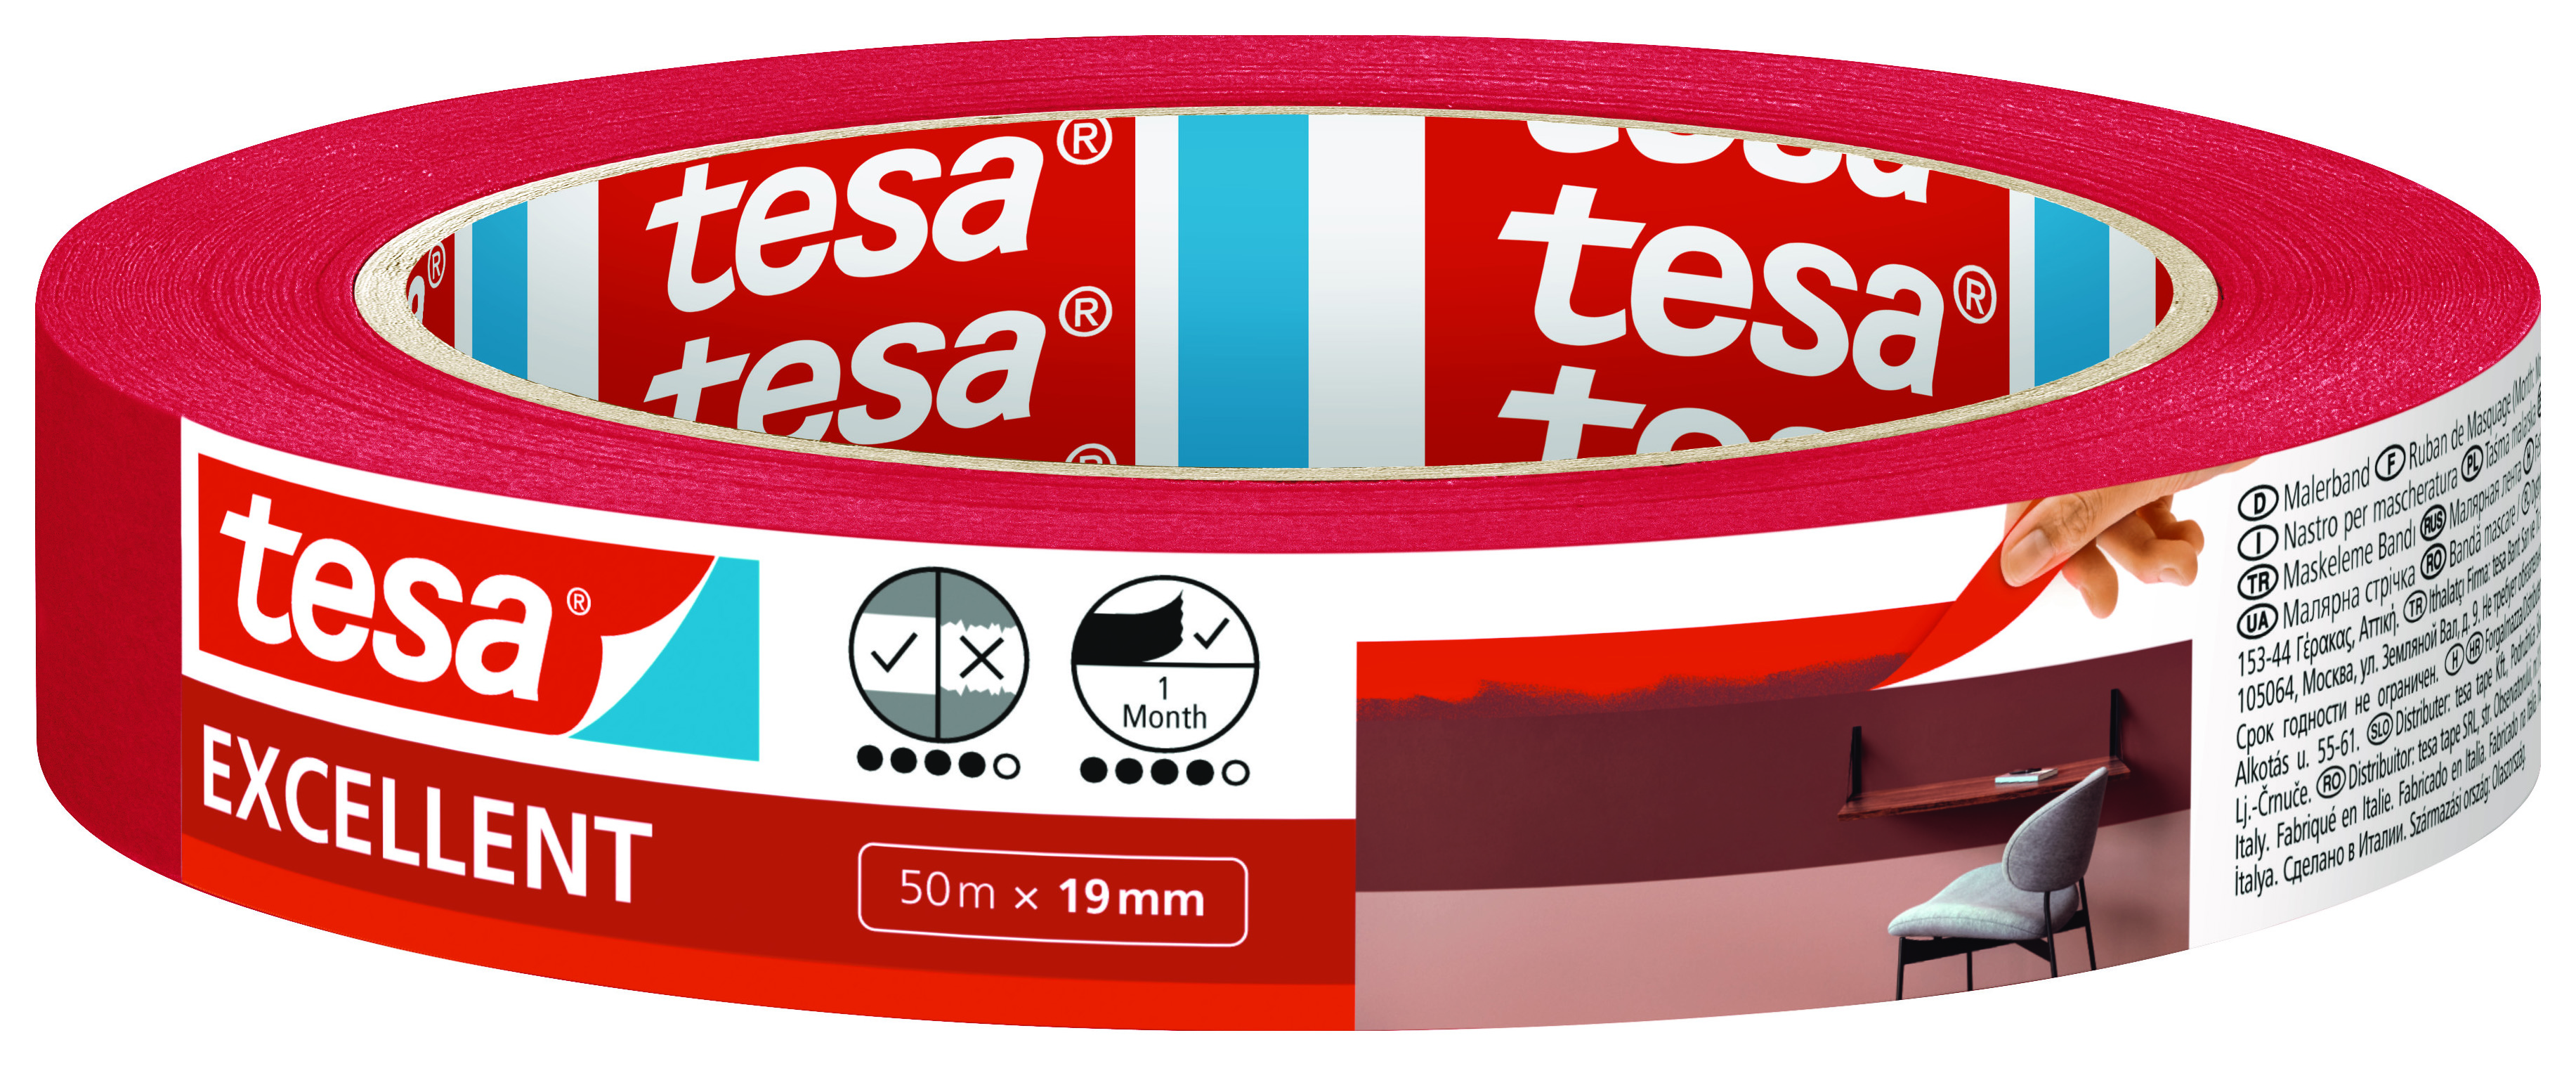 Tesa Masking Excellent Masking Tape - 50m x 19mm